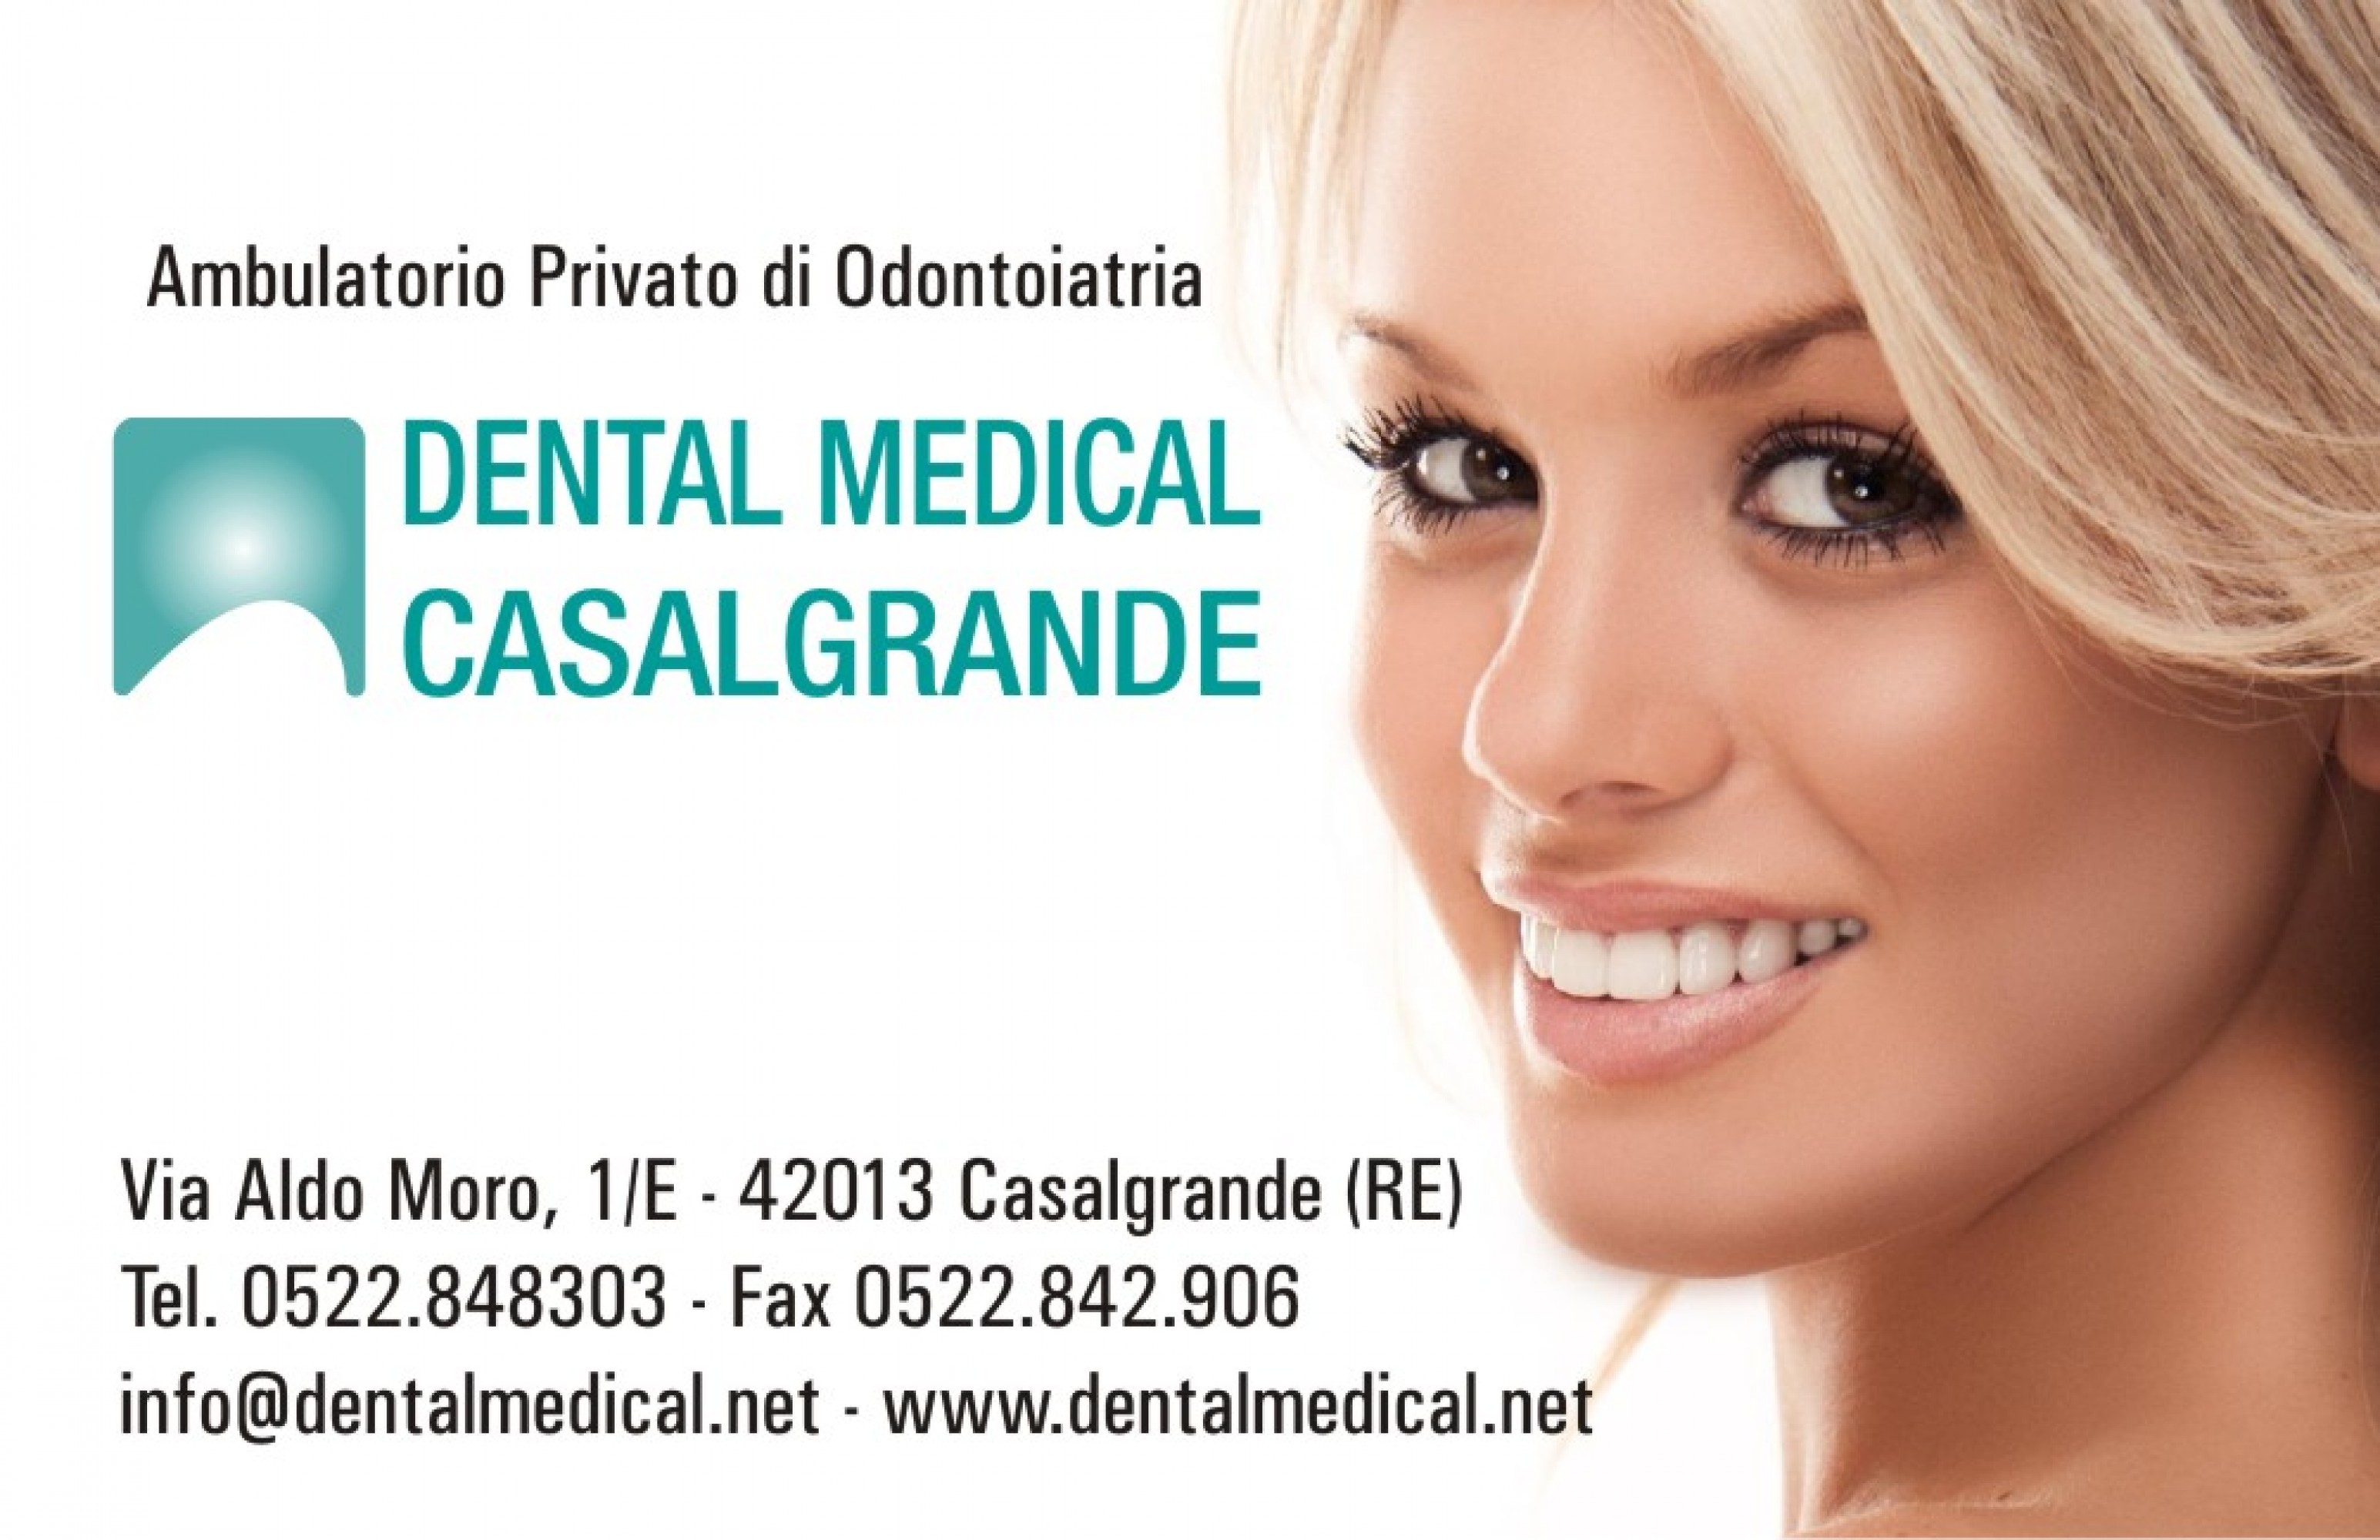 Dental Medical Casalgrande <br> Casalgrande (Re)